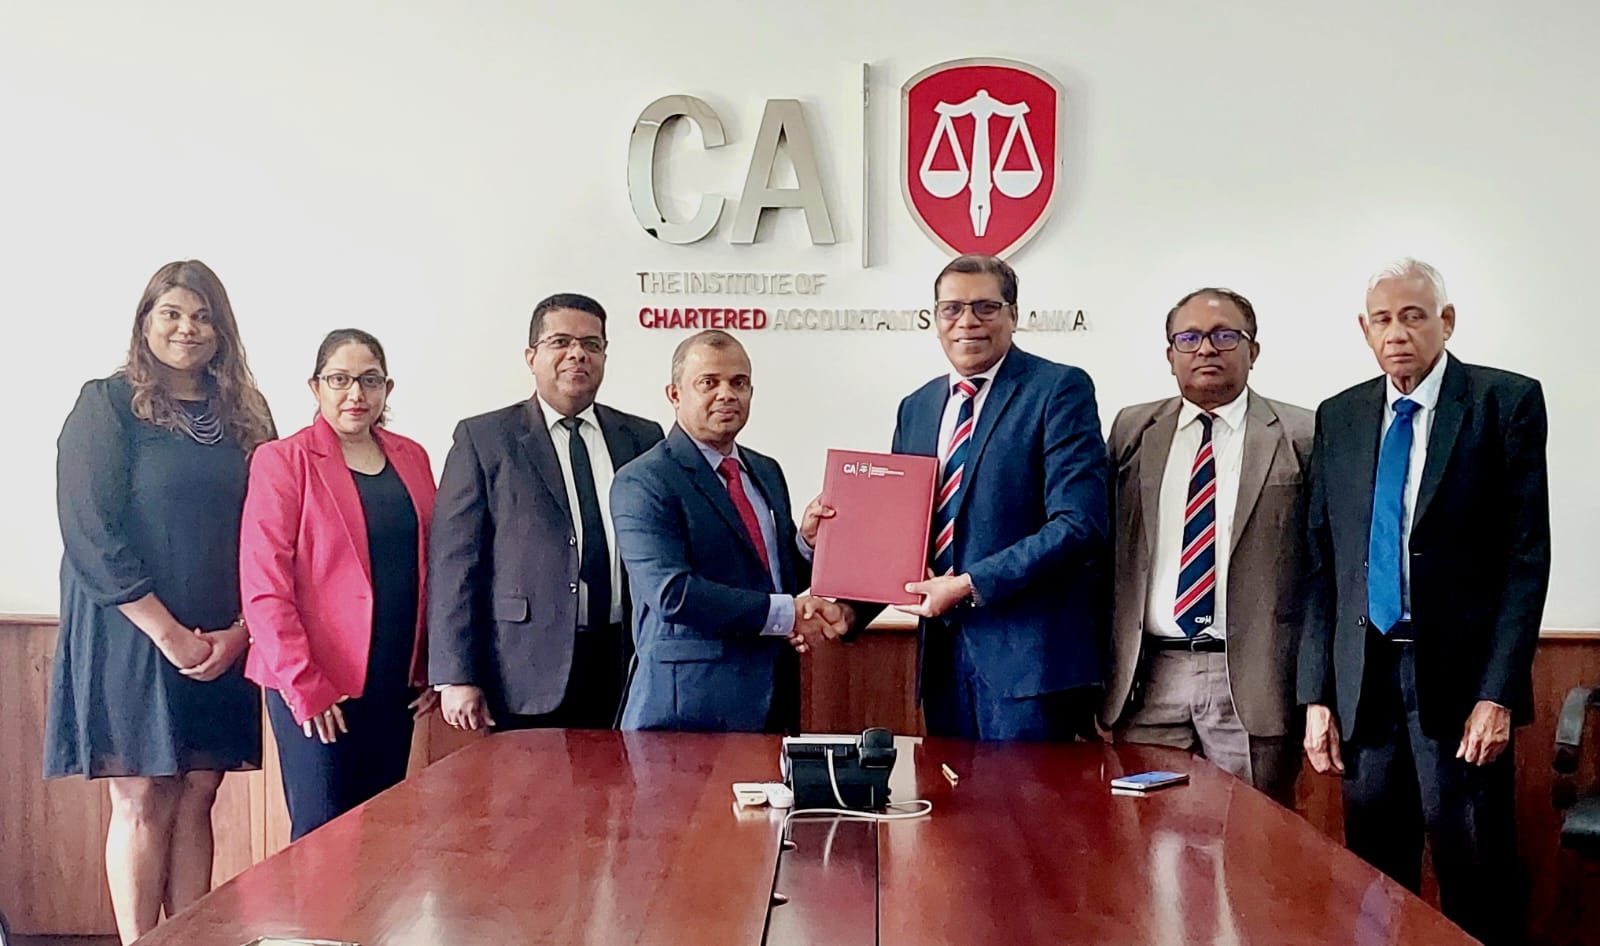 CA Sri Lanka CIPM MoU 2023: Mr. Sanjaya Bandara, President of CA Sri Lanka, and Mr. Ken Vijayakumar, President of CIPM exchange copies of the signed agreement in the presence of officials from both professional bodies.